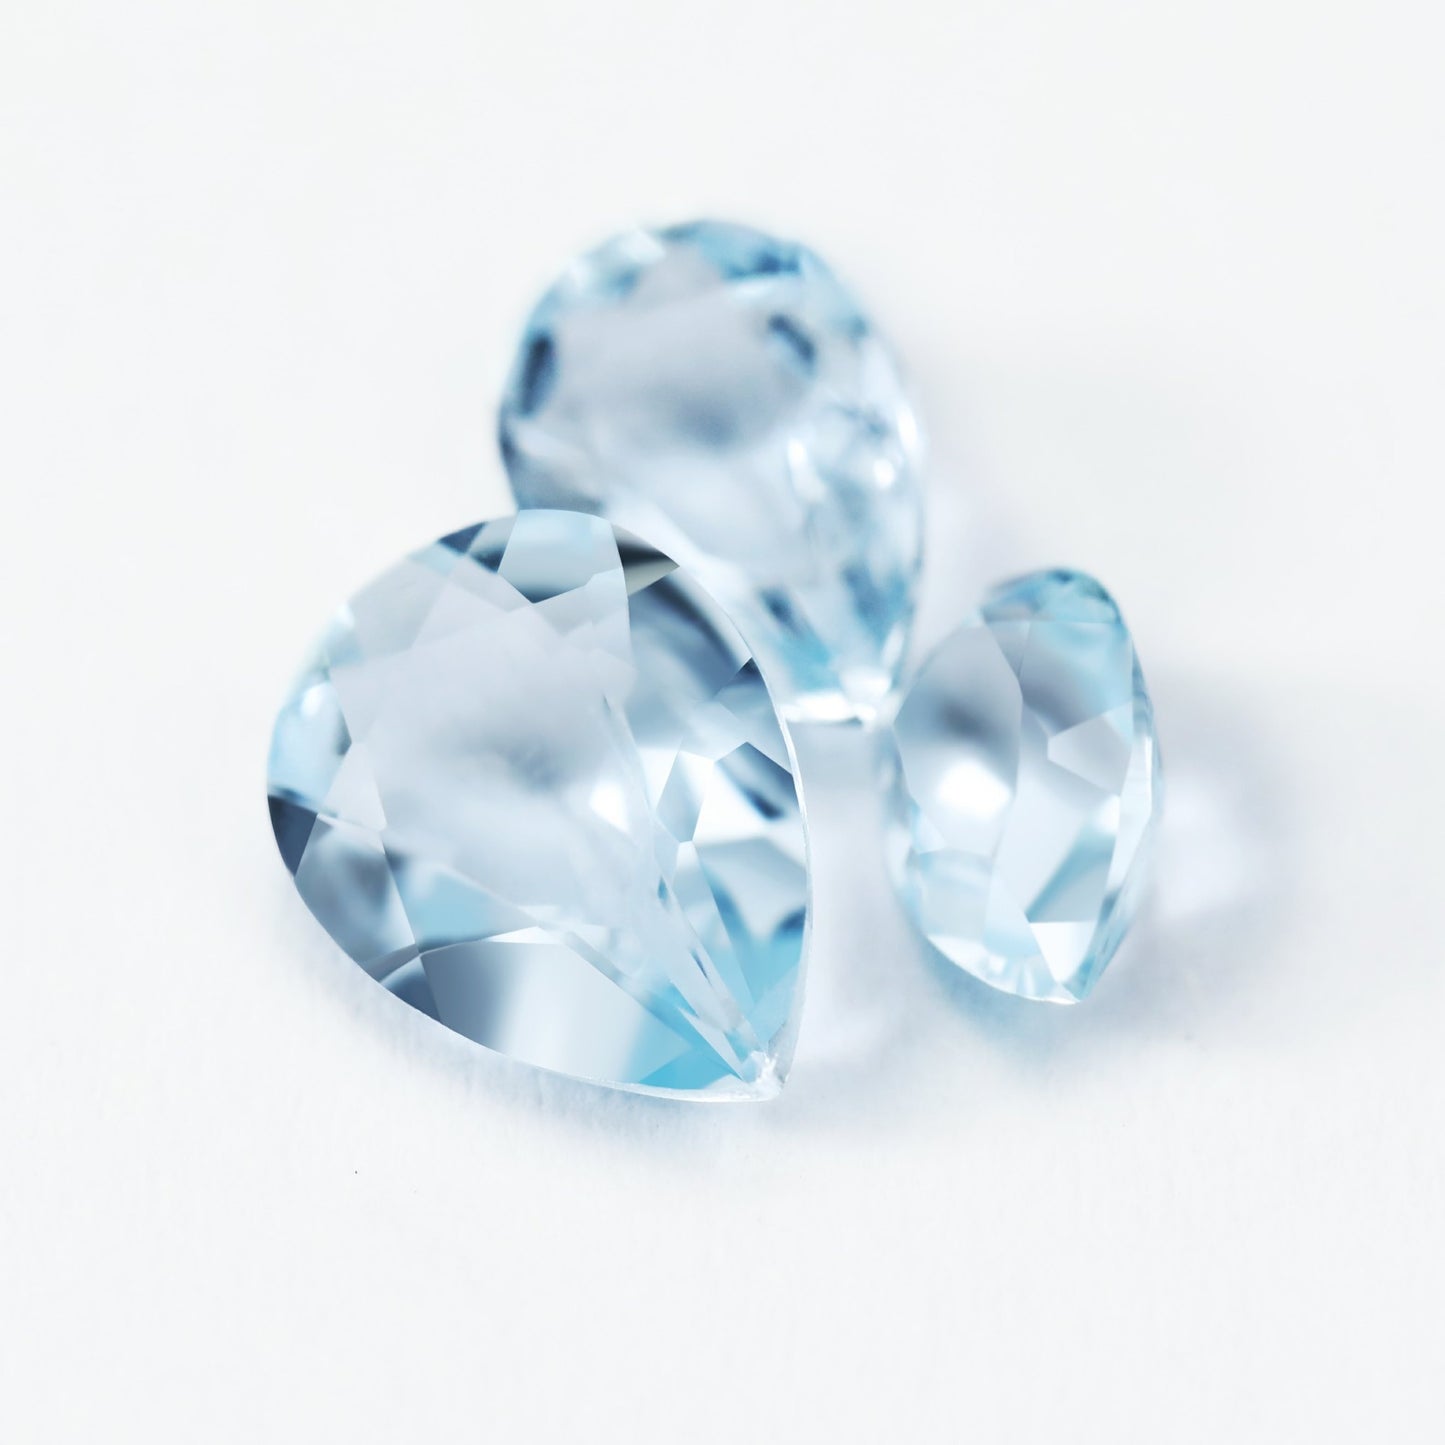 3 tear drop cut light blue aquamarine gems.